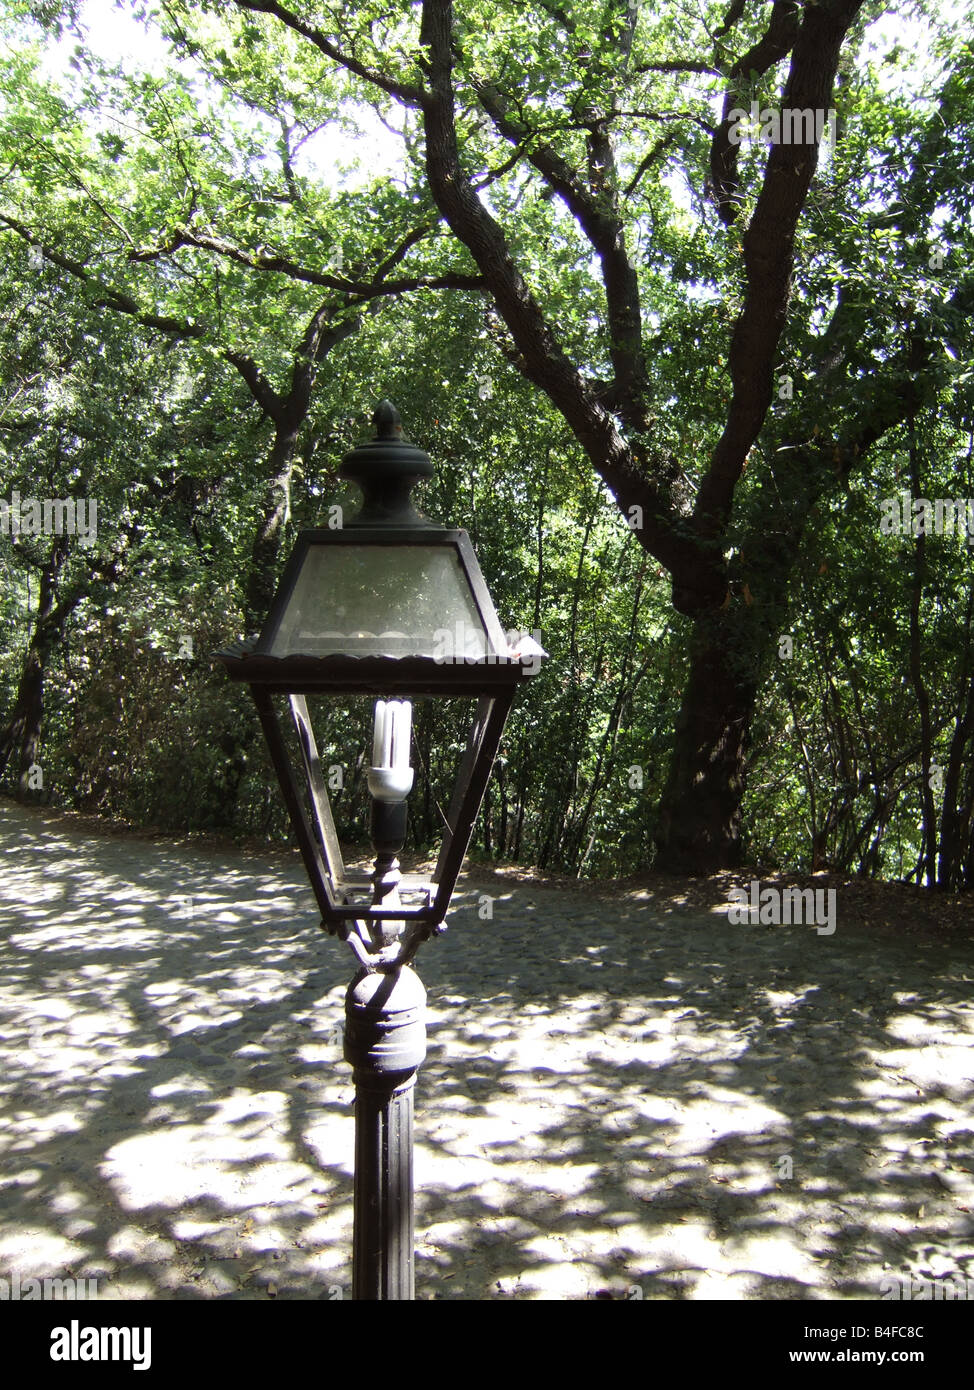 Straßenbeleuchtung Lampe im Wald Wald im Land Stockfotografie - Alamy